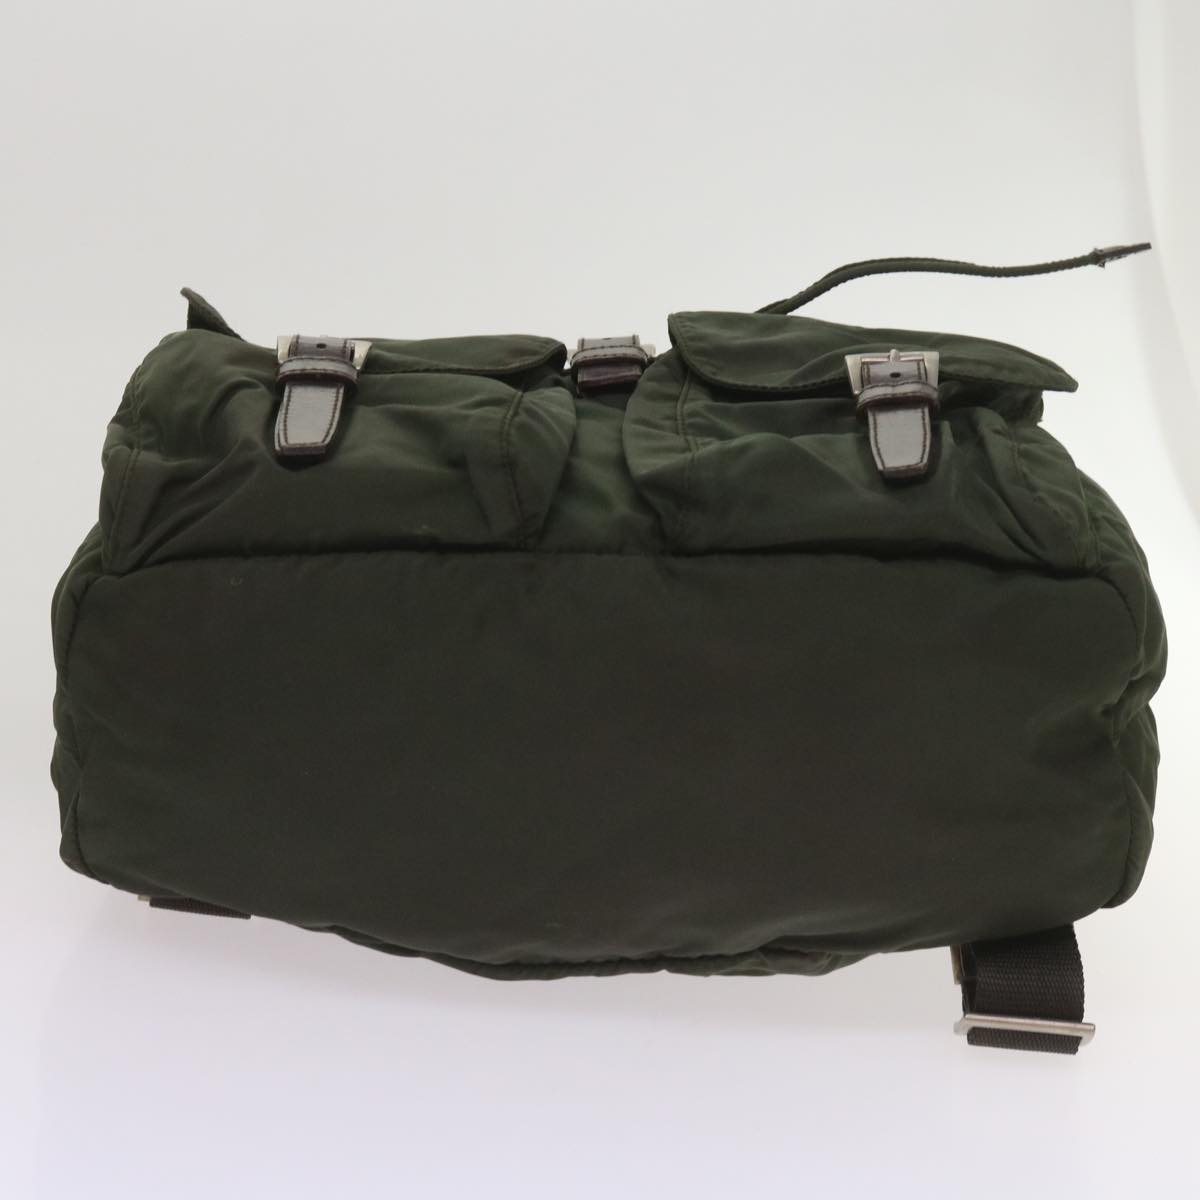 PRADA Backpack Nylon Khaki Auth bs12024